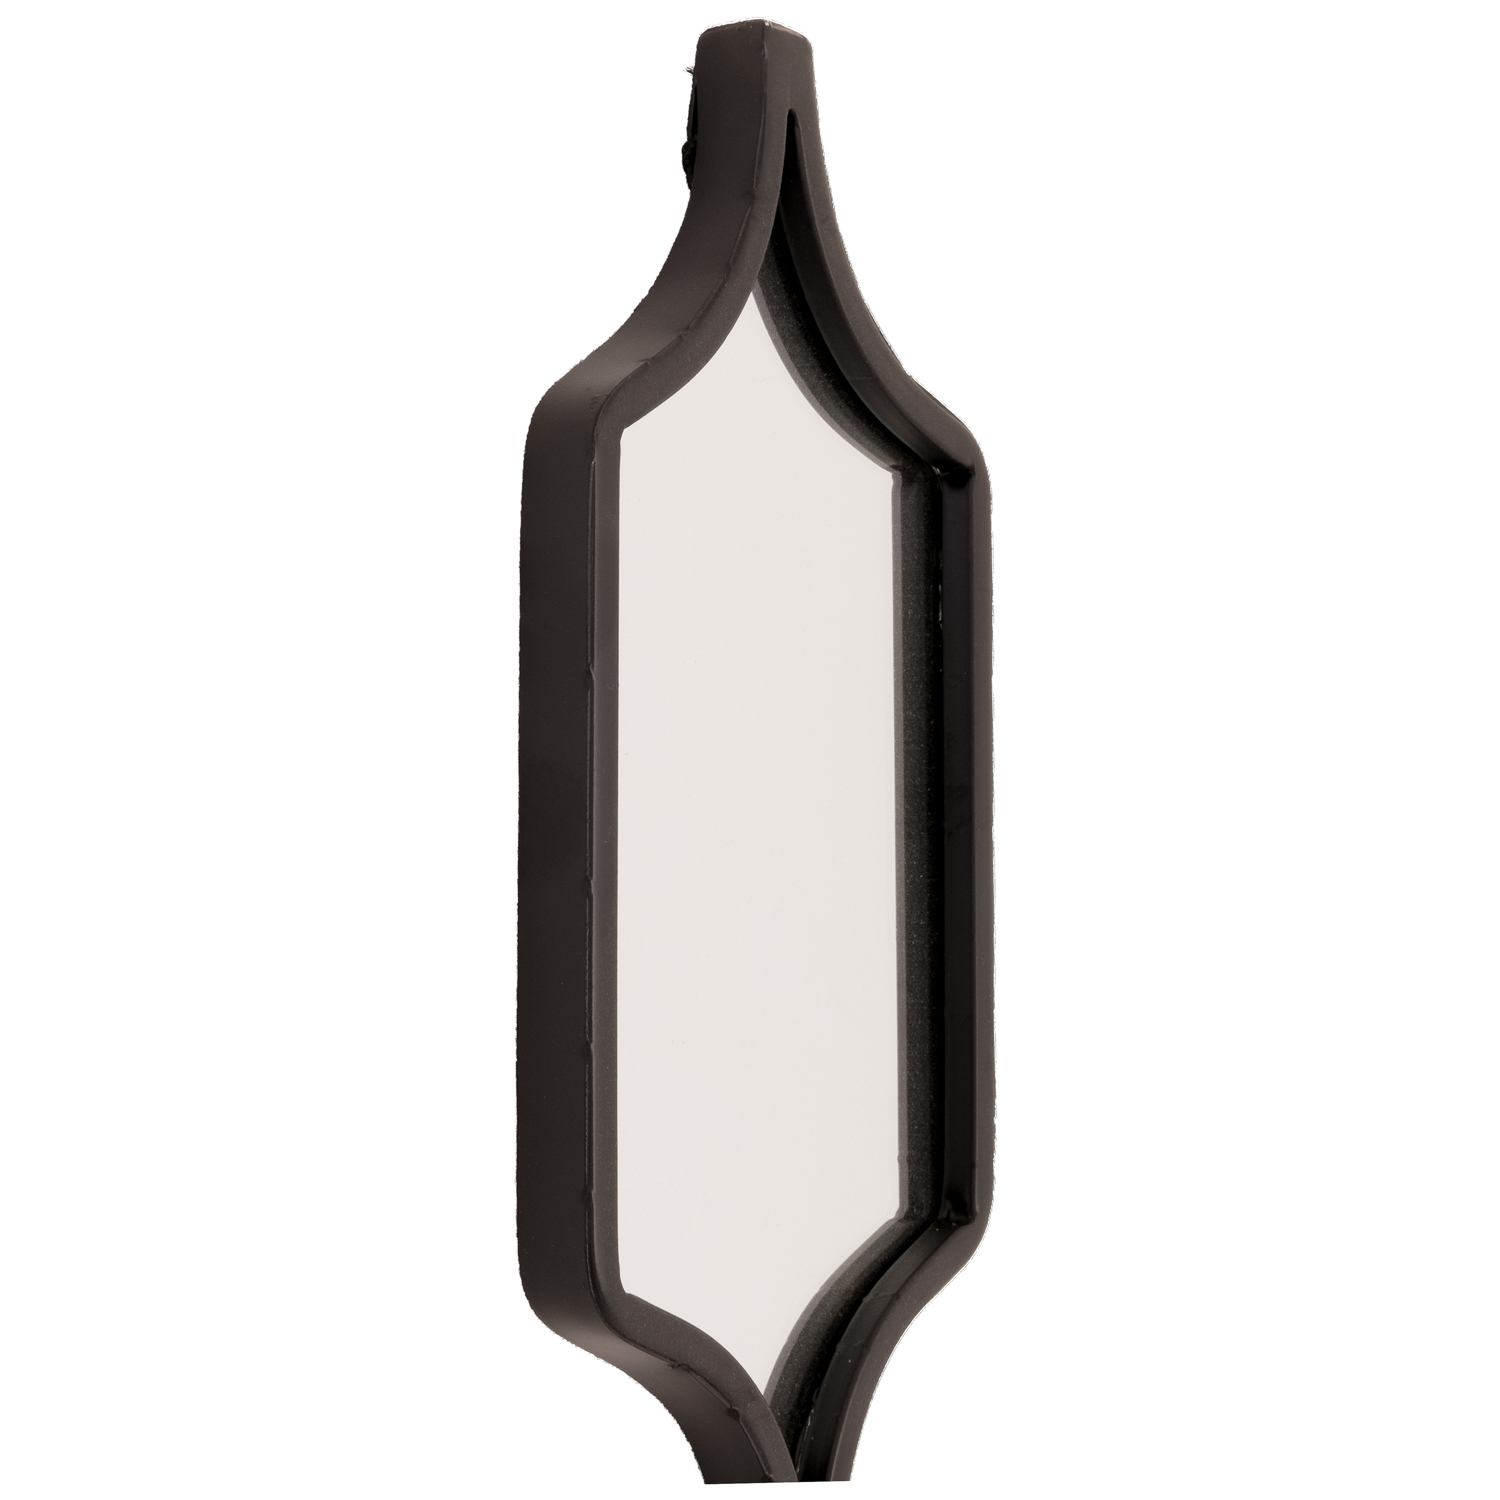 Decorative Black Hanging Mirror - Image 2